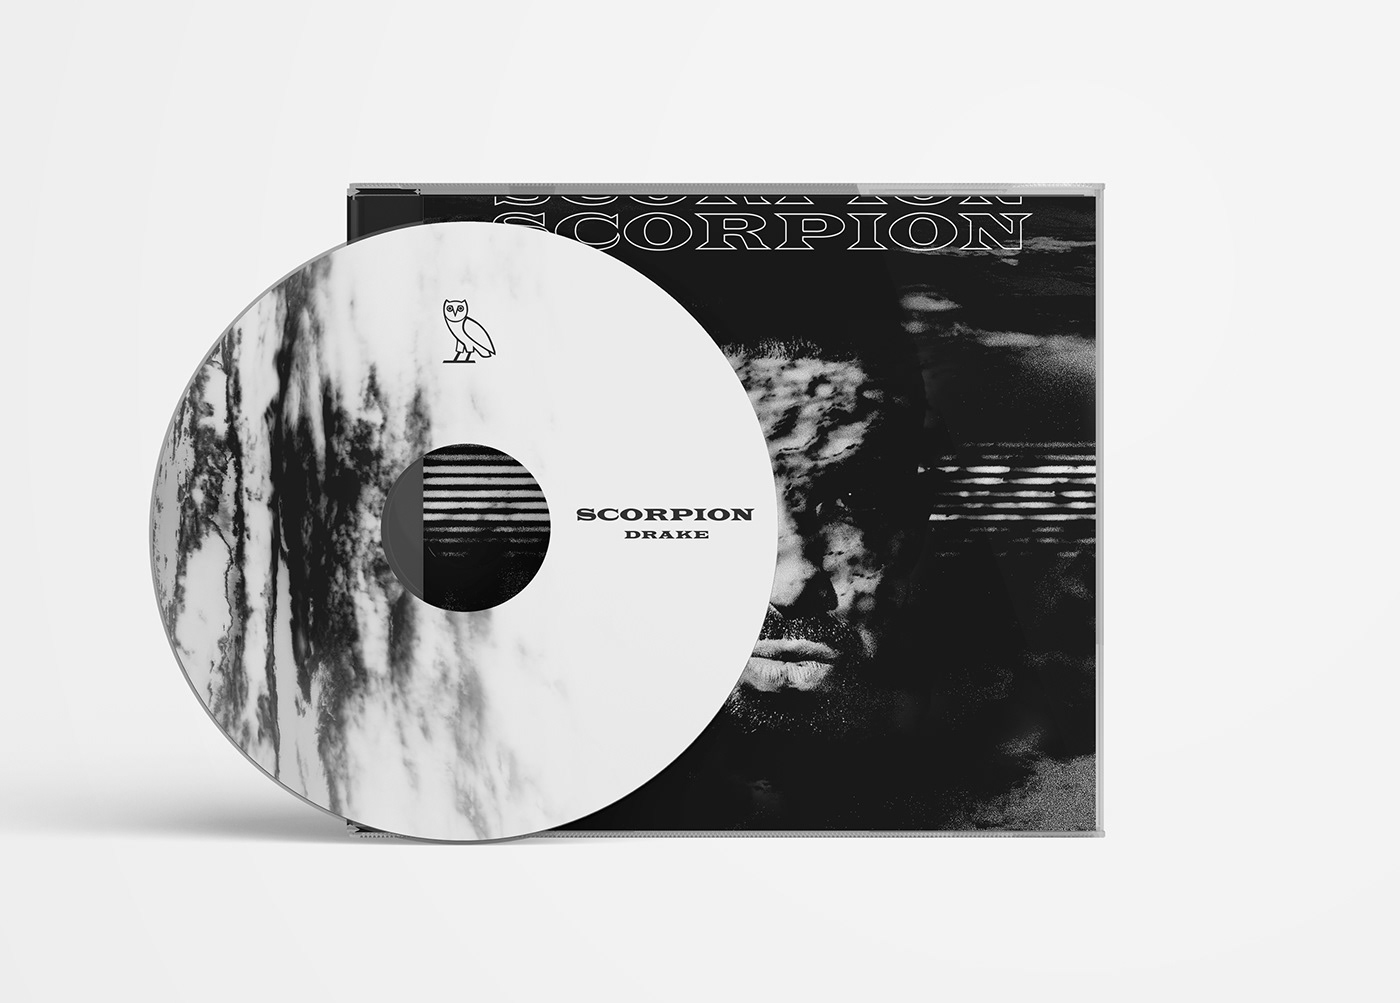 Drake Album artwork concept digital music cover art direction scorpion